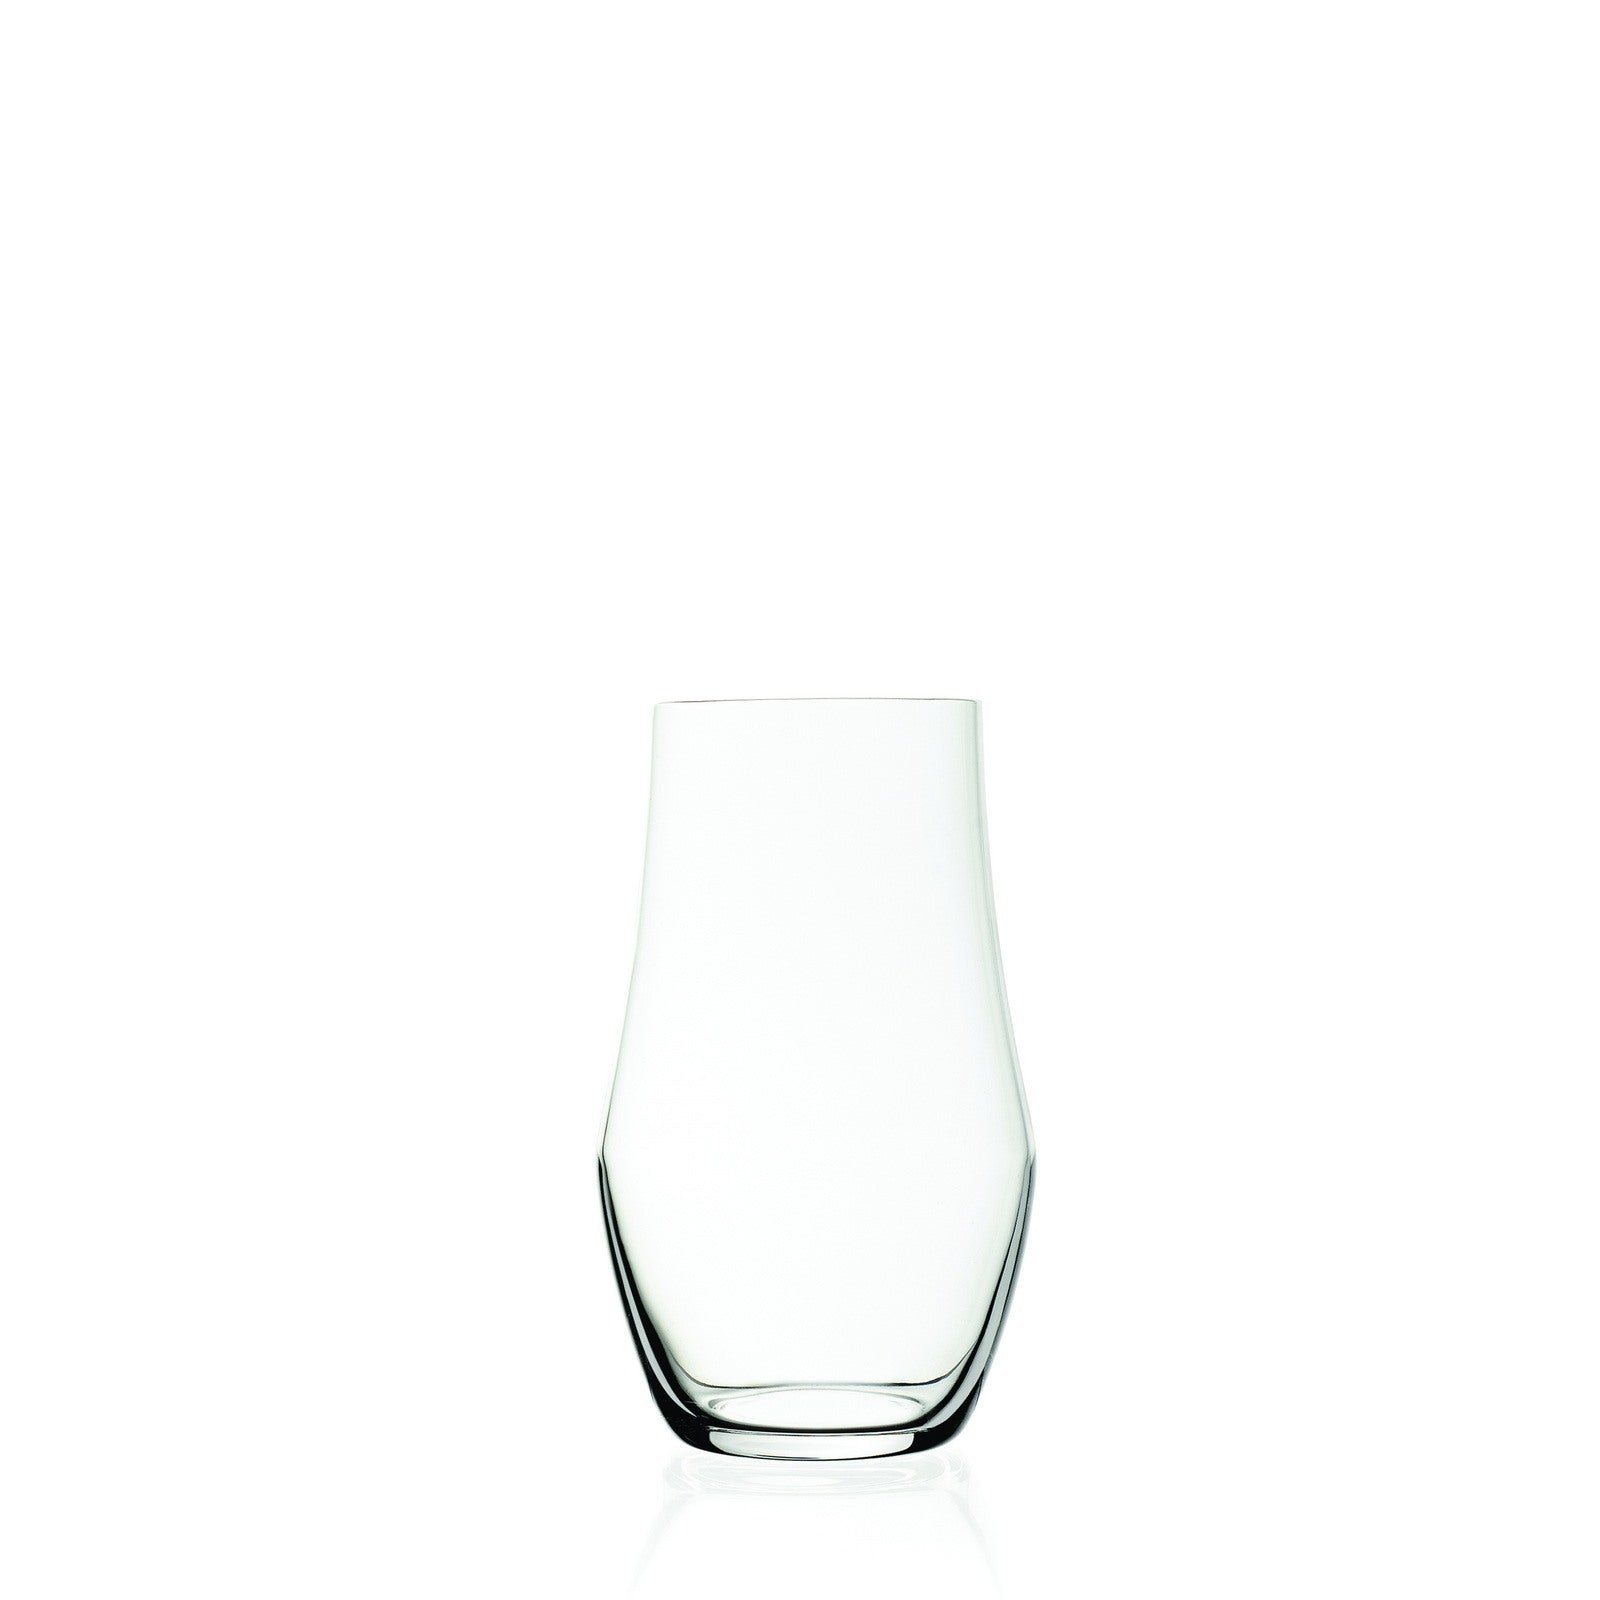 immagine-1-rcr-cristalleria-italiana-ego-e50-set-da-6-bicchieri-in-vetro